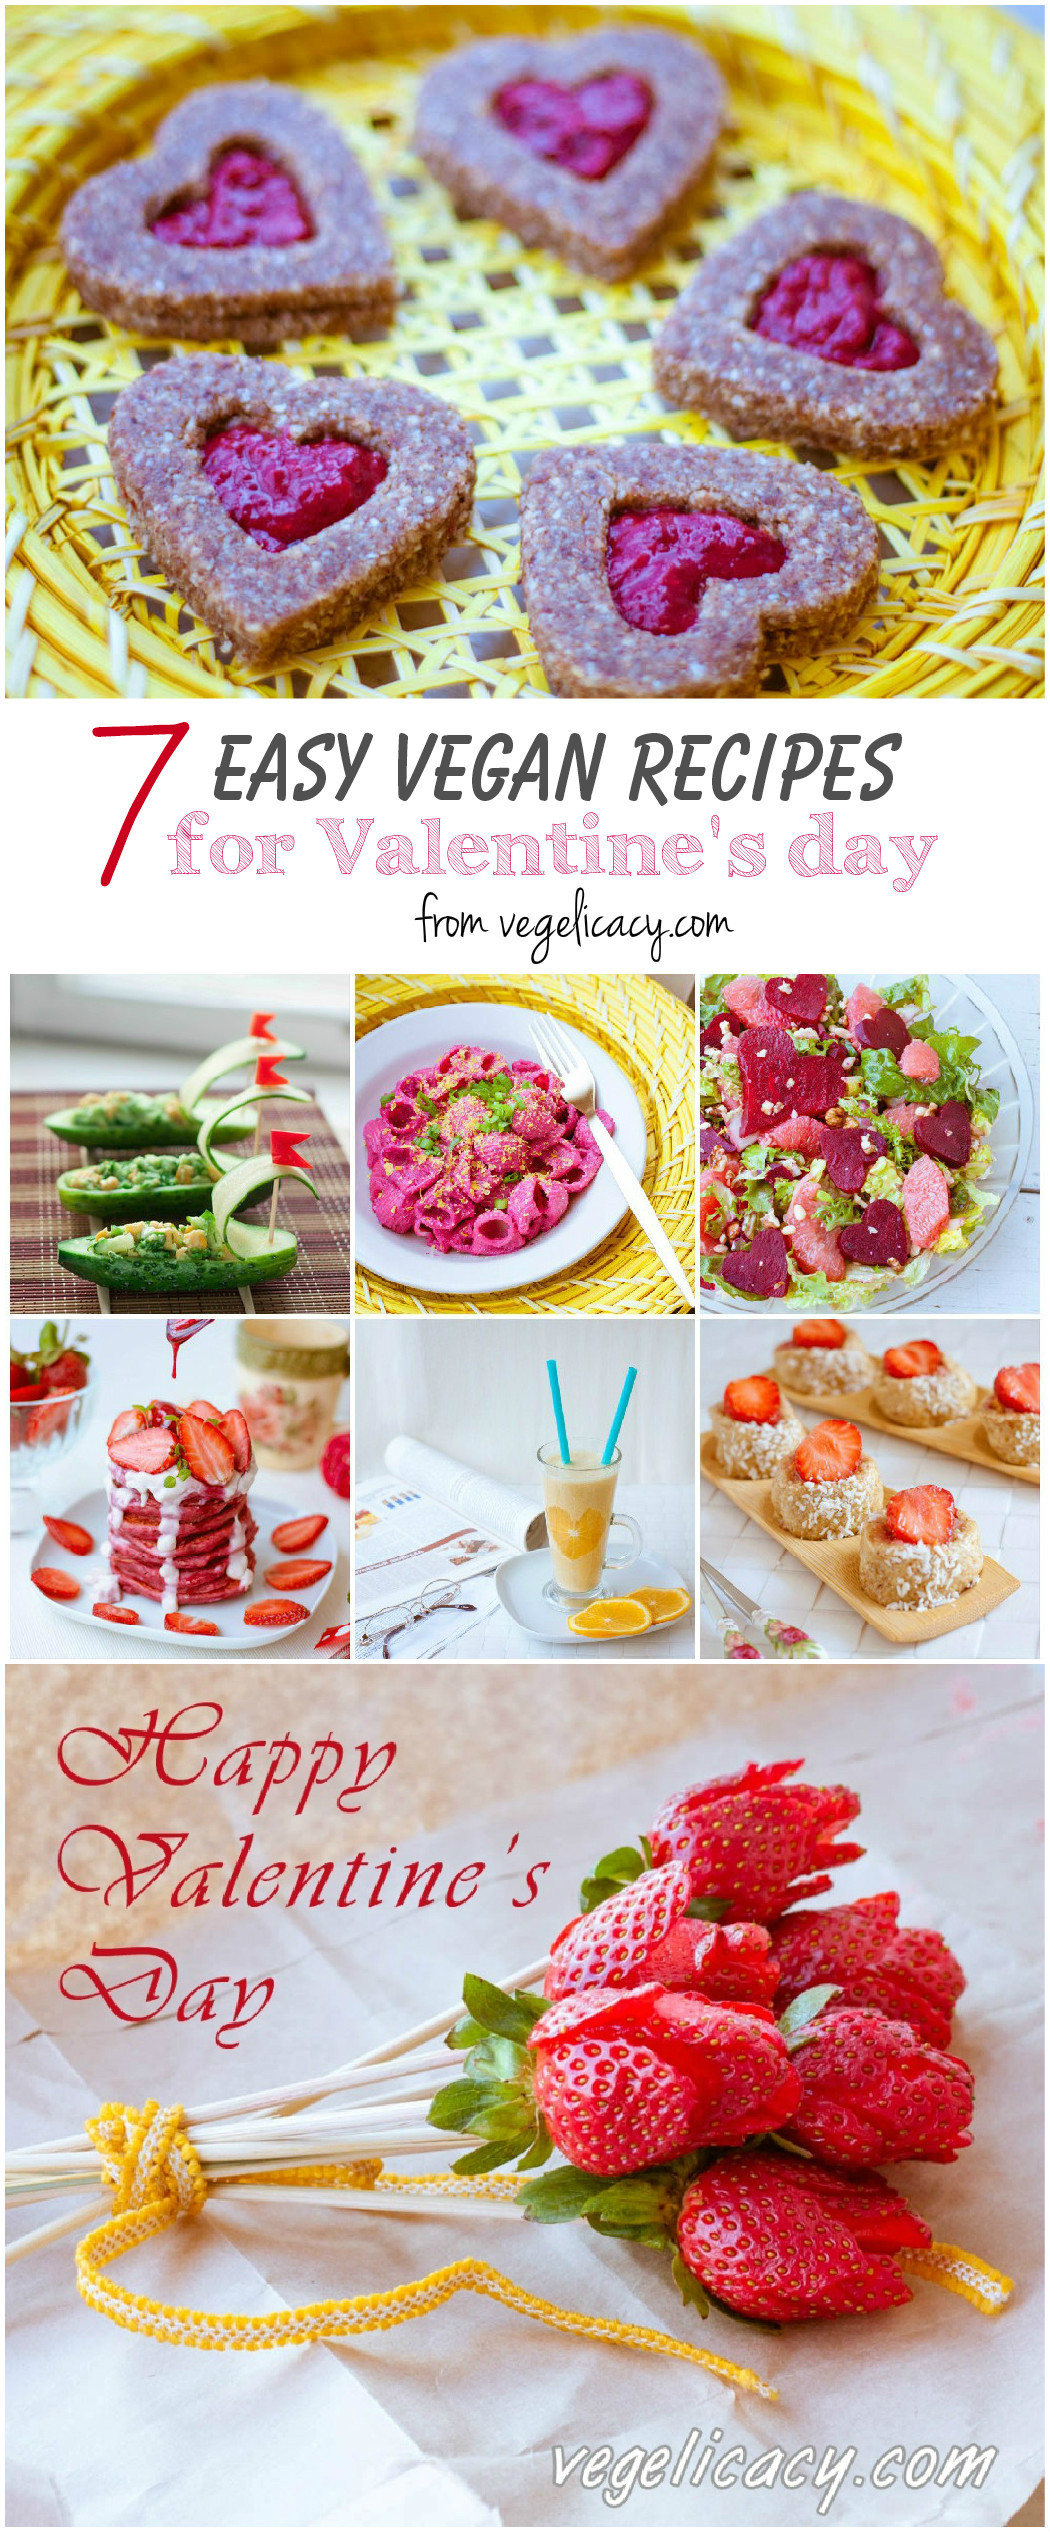 Vegan Valentine'S Day Recipes
 Top 7 easy vegan recipes for Valentine s day